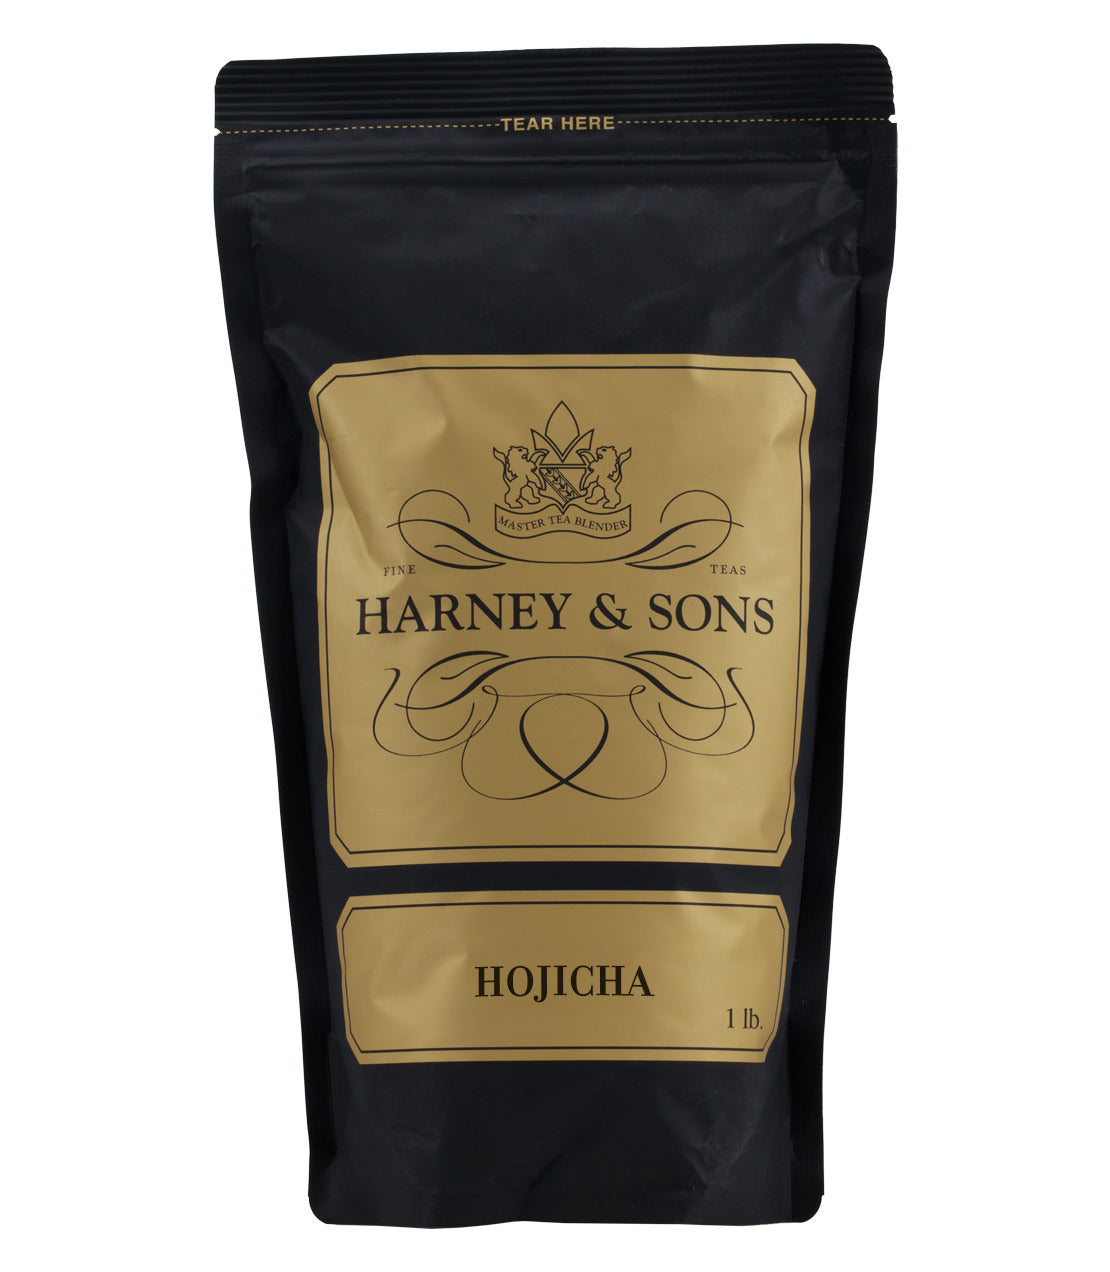 Hojicha - Loose 1 lb. Bag - Harney & Sons Fine Teas